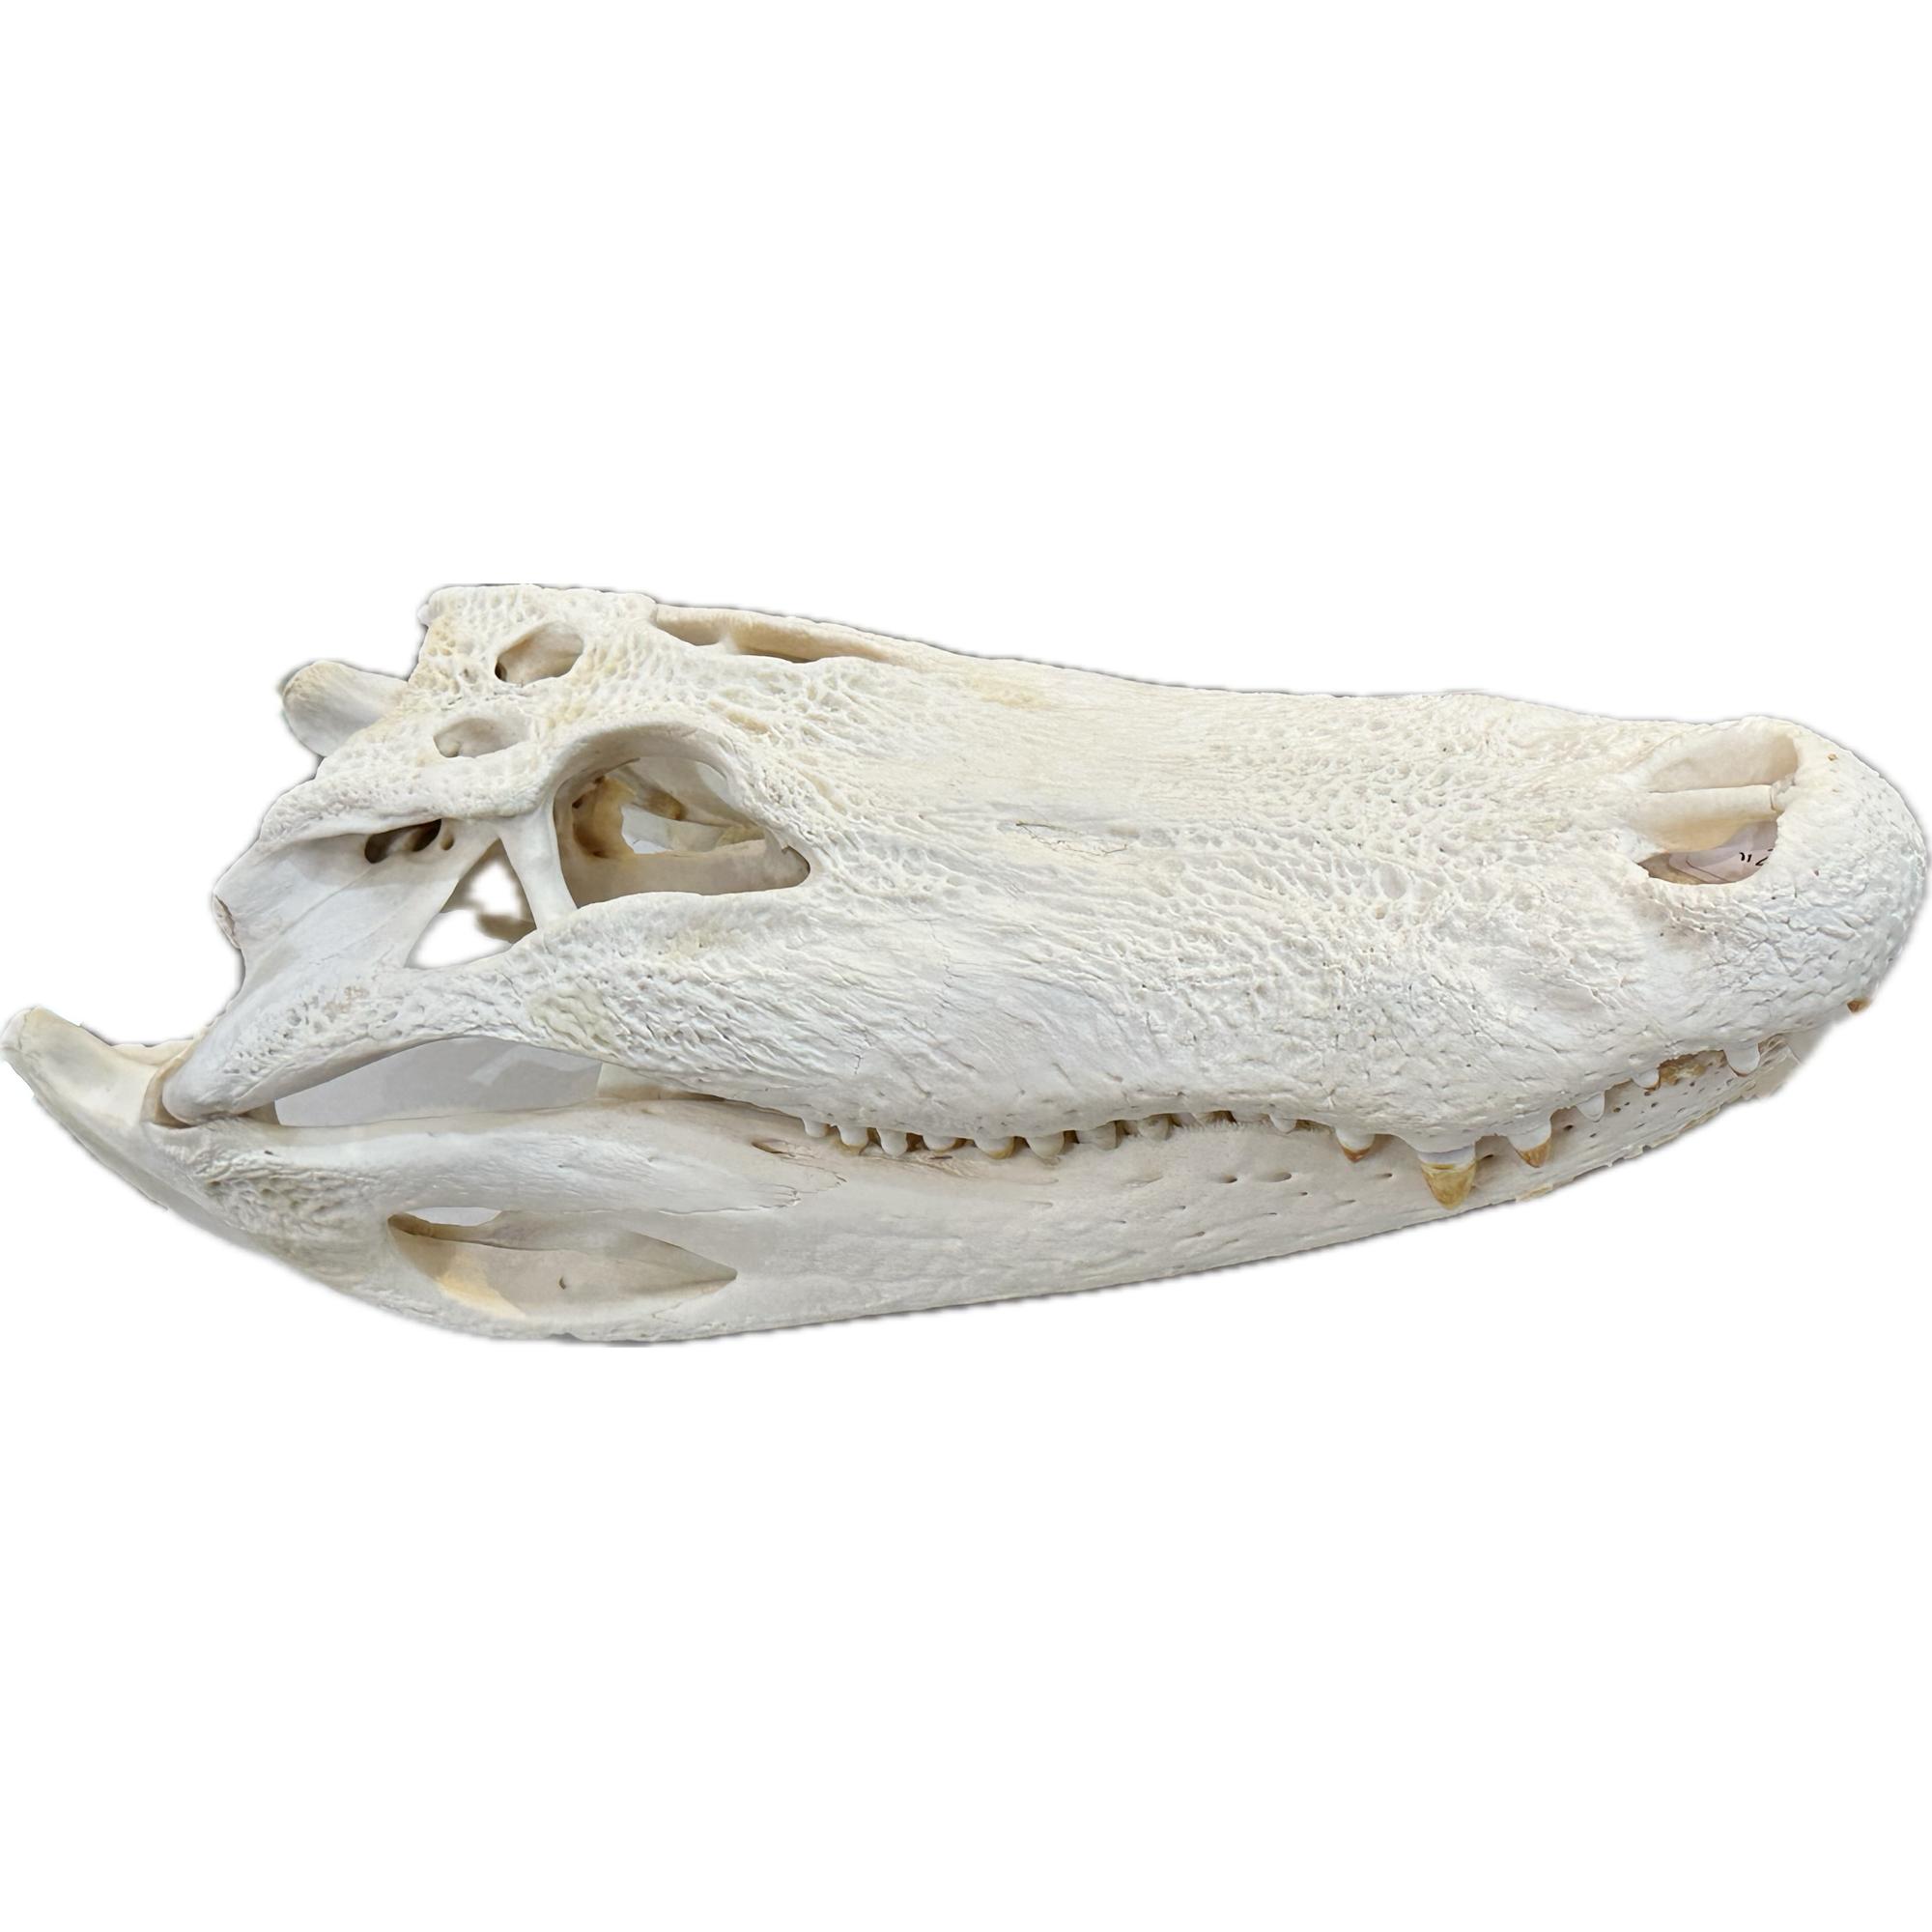 Taxidermy, Alligator Skull, Monster 22 inch Prehistoric Online